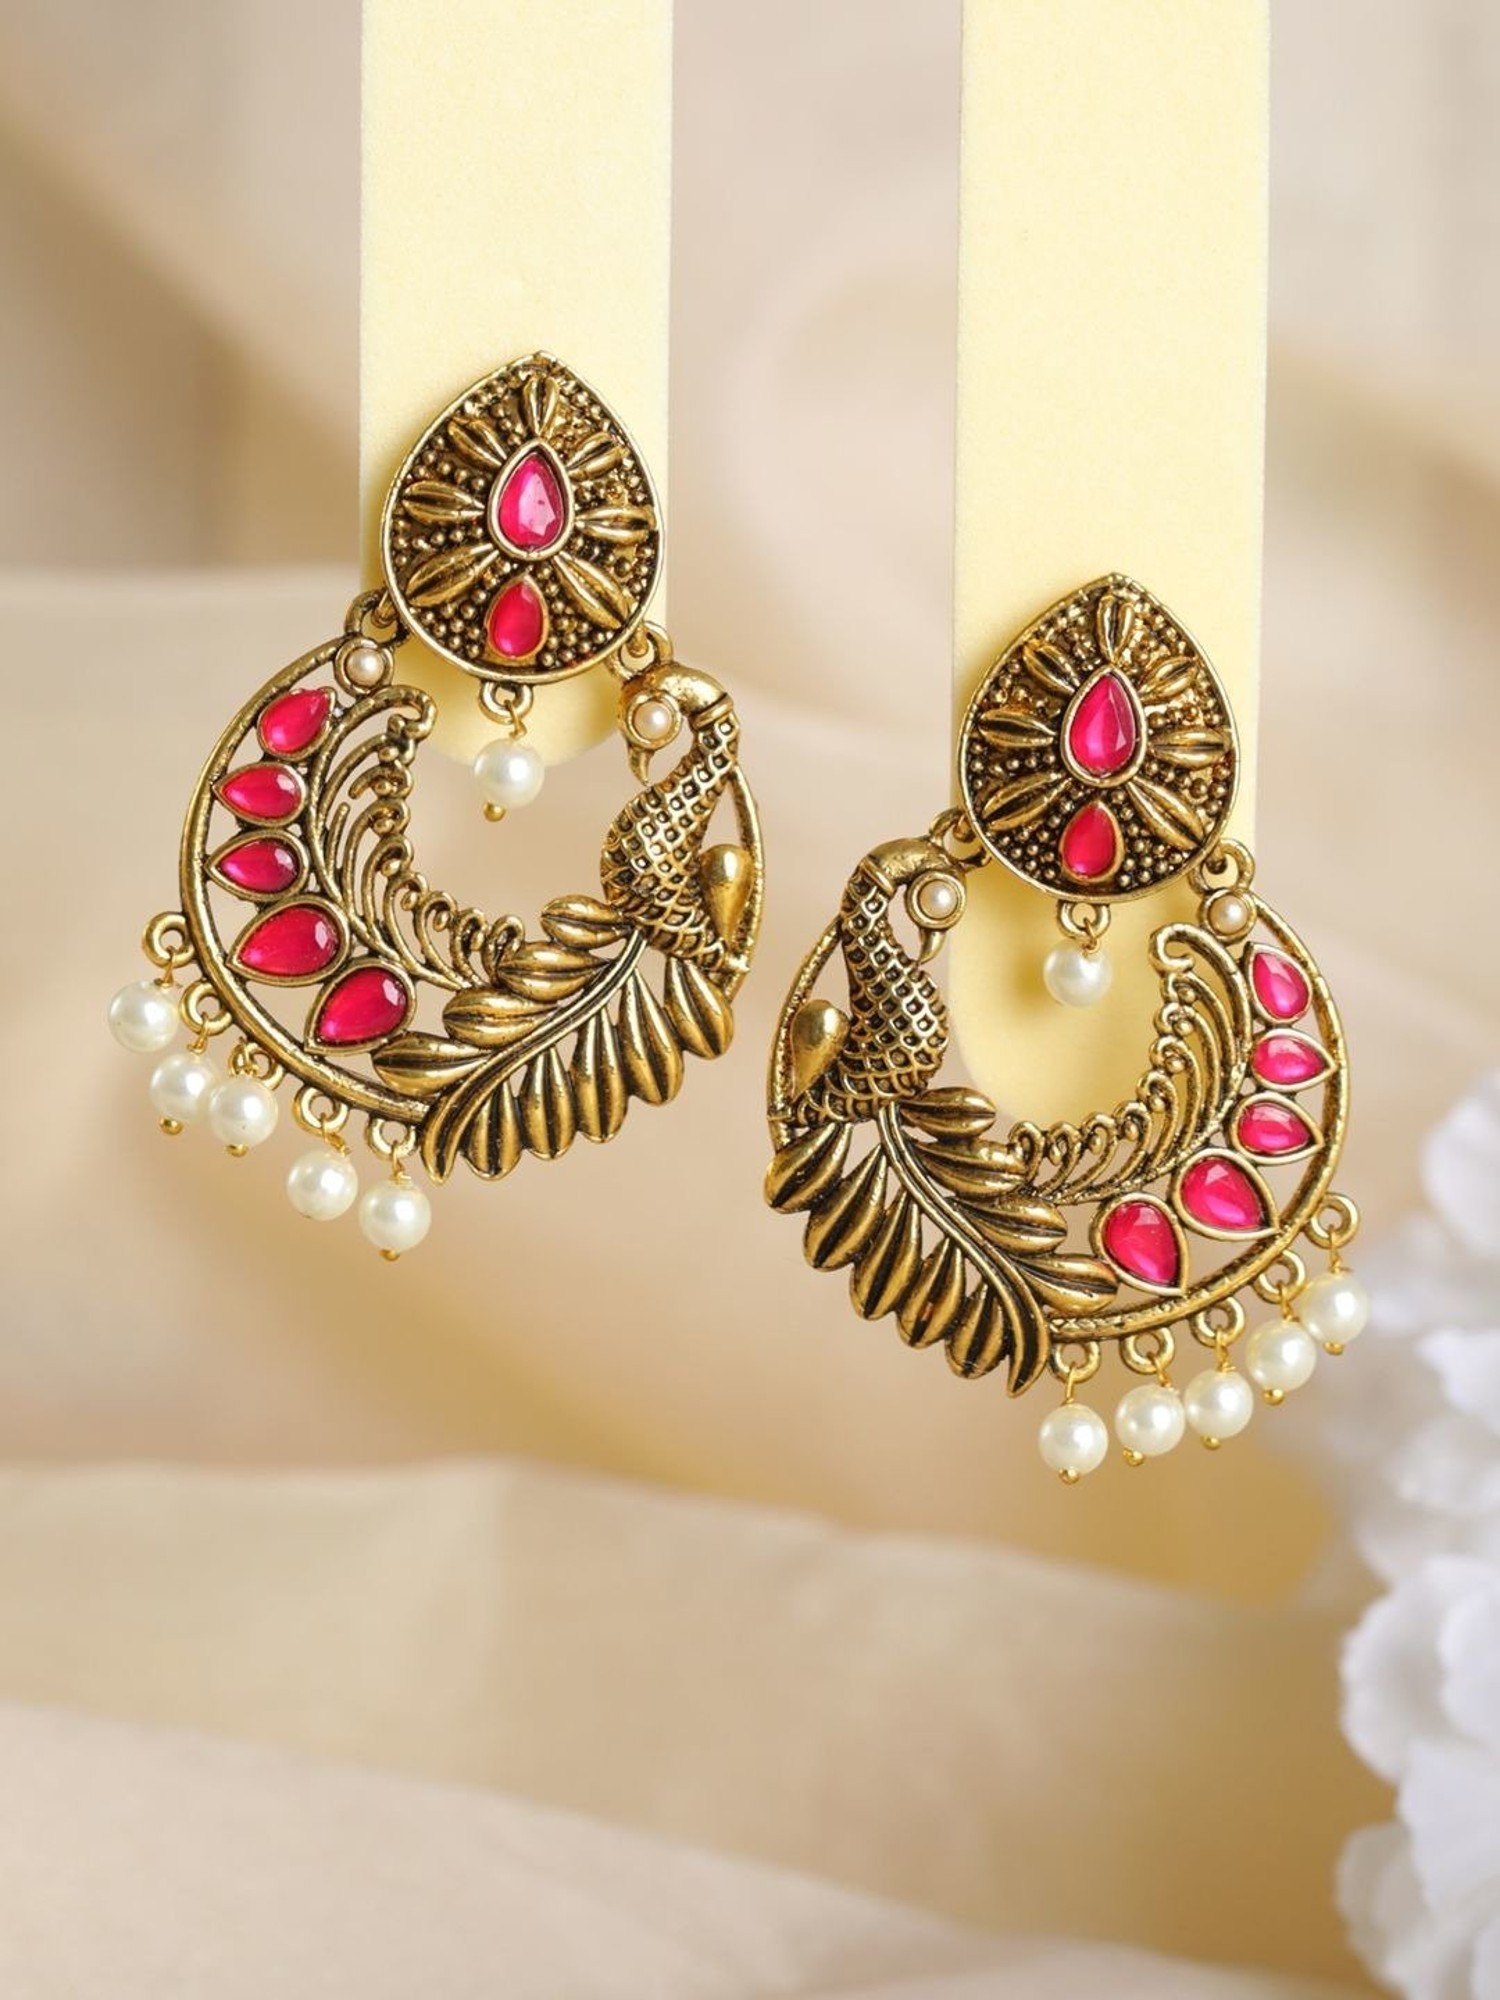 Aggregate more than 76 pink peacock earrings